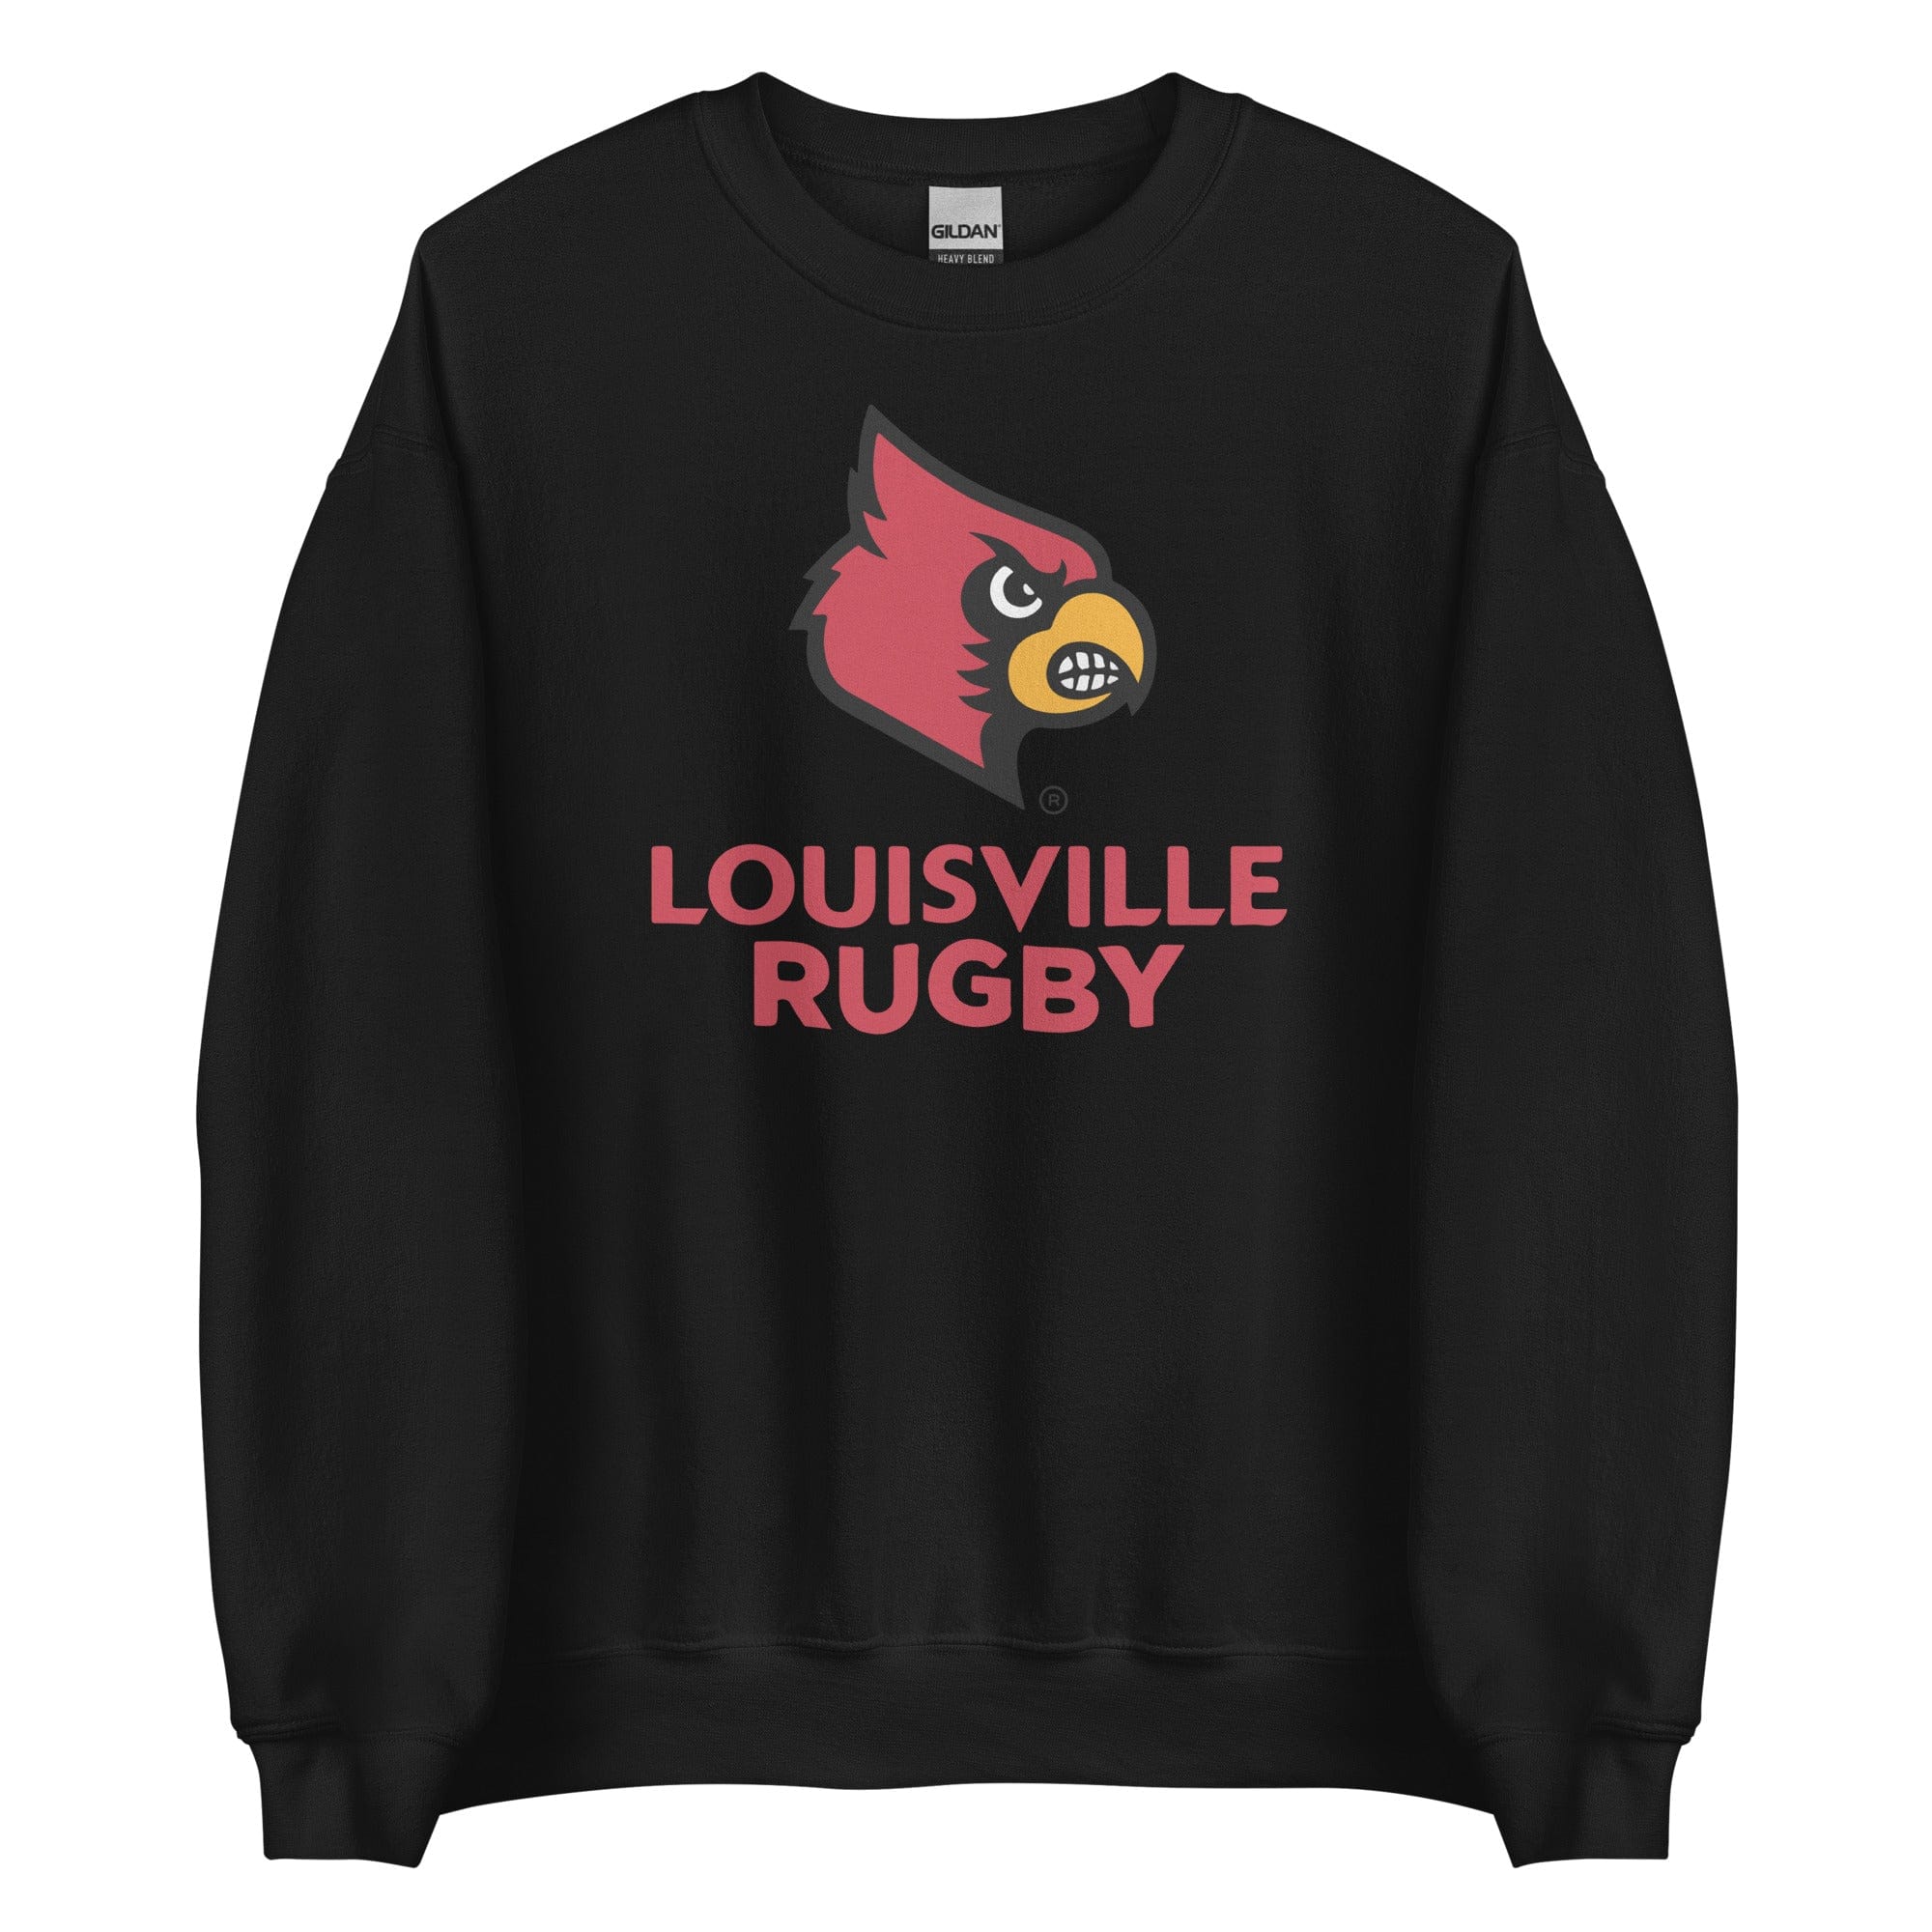 PF University of Louisville Rugby Crew Neck Sweatshirt Black / XL